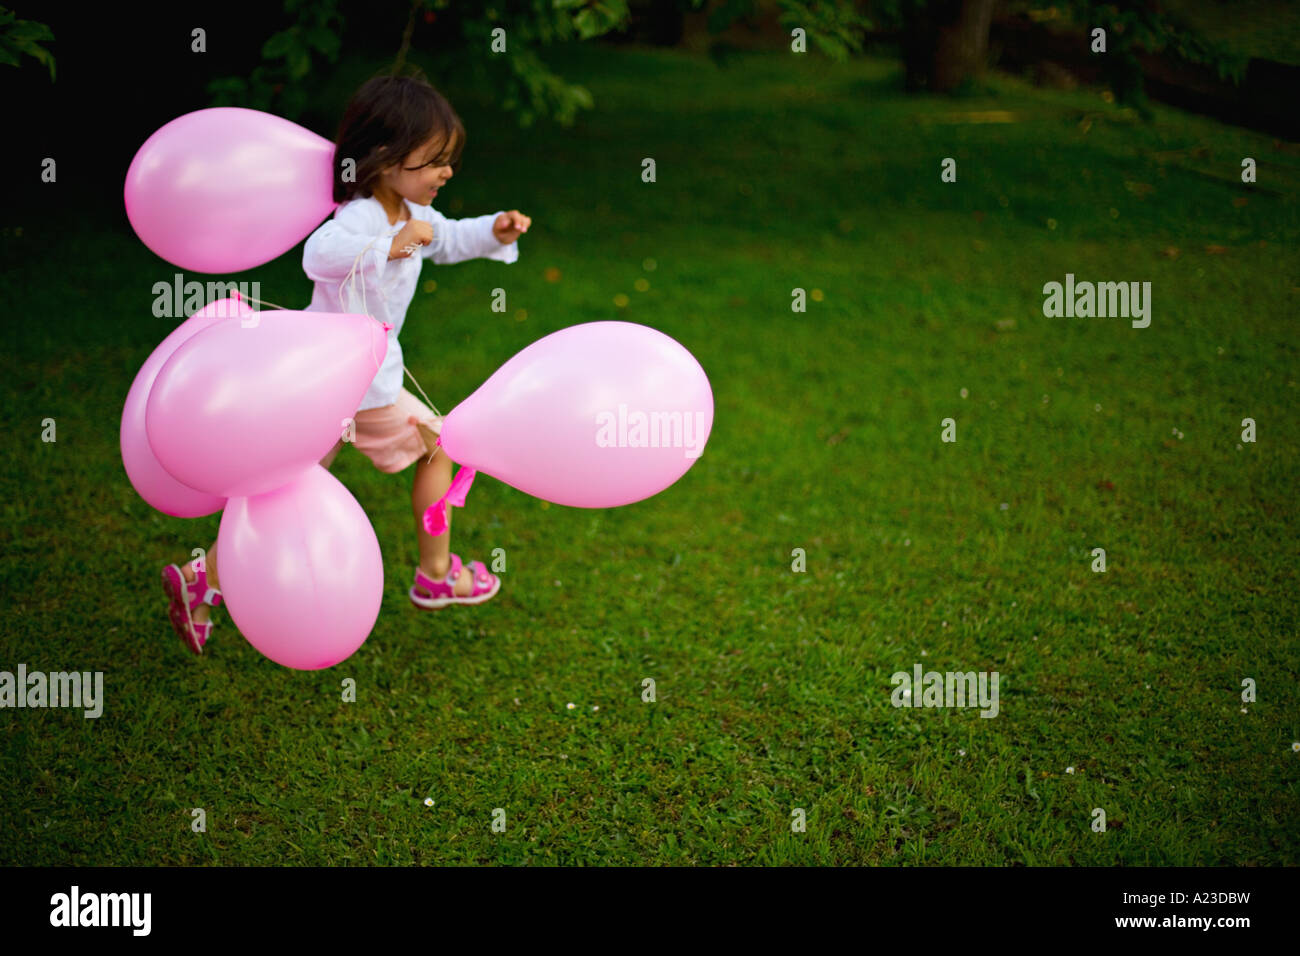 Girl runs with pink balloons Stock Photo